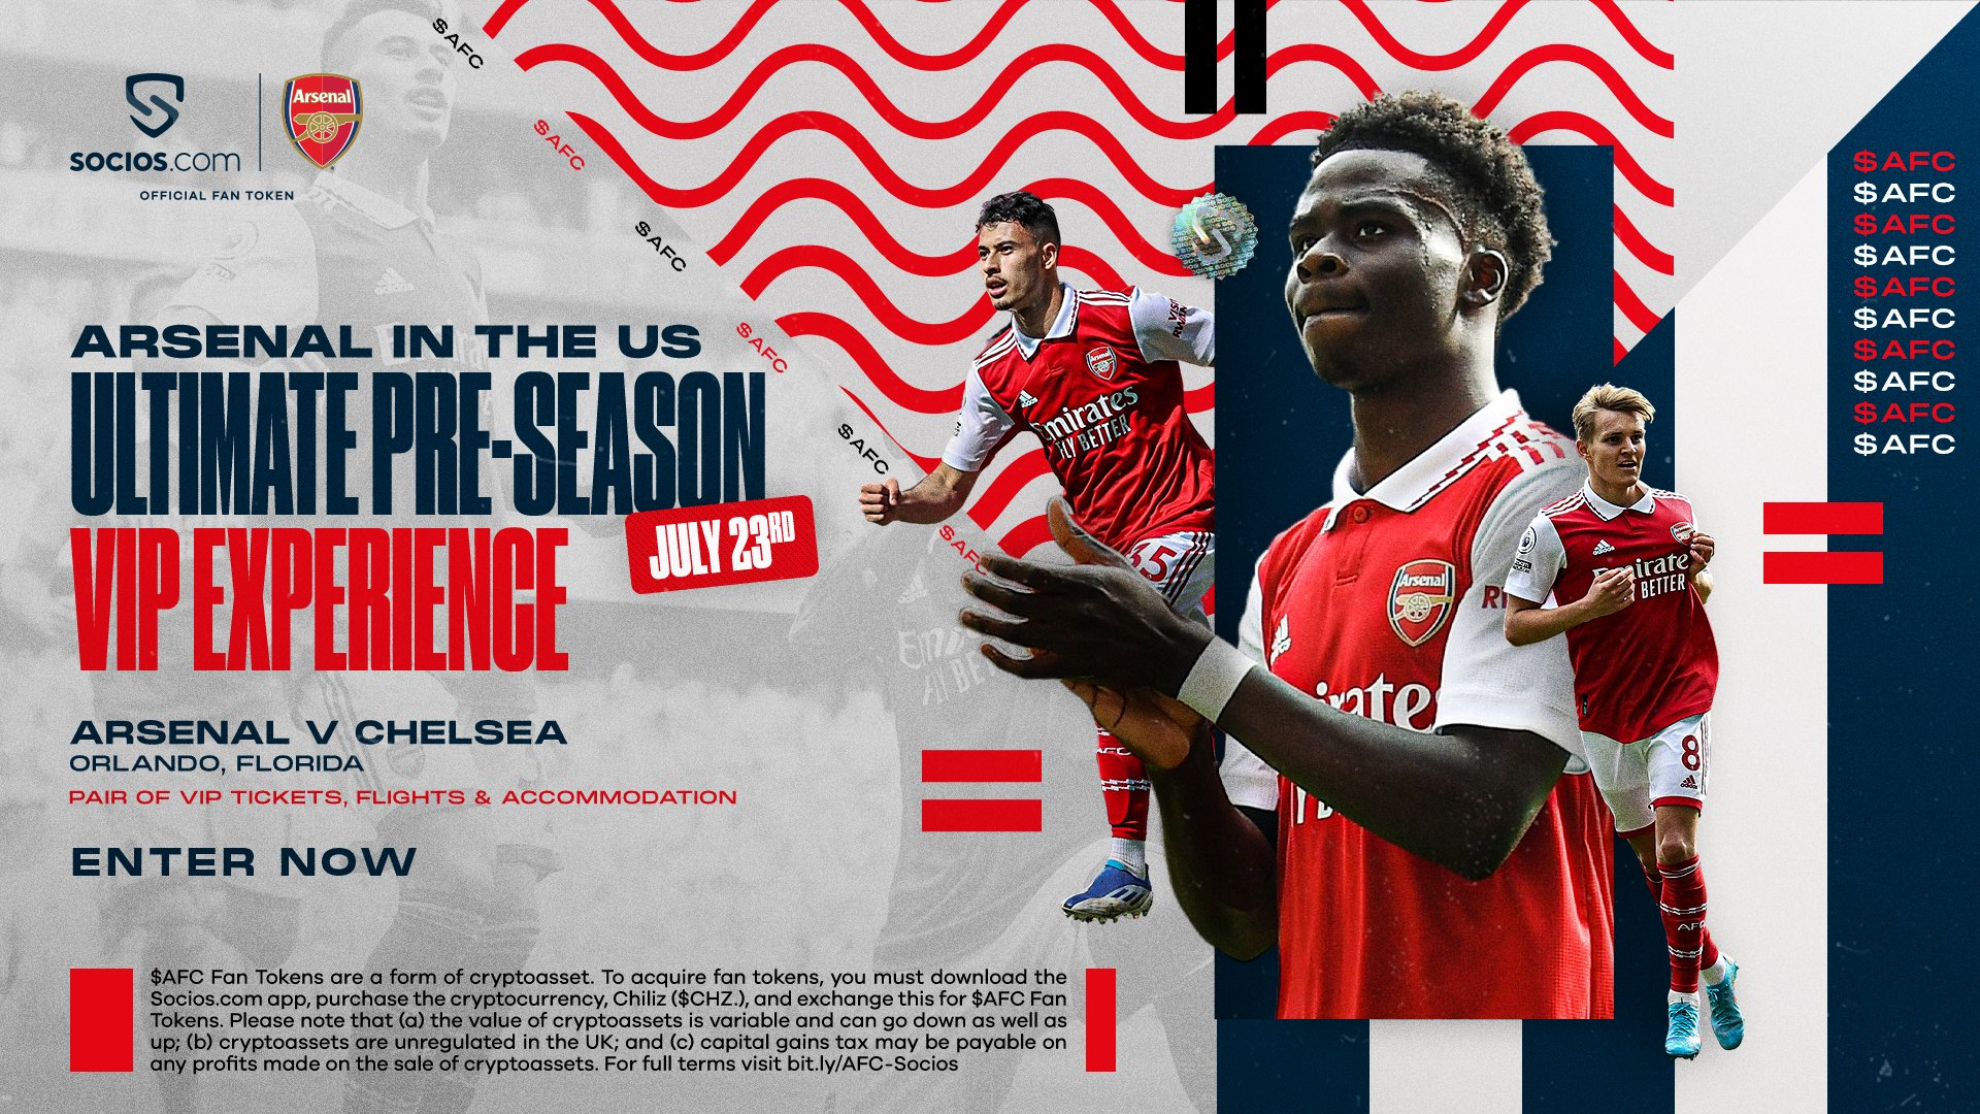 Arsenal pre-season promo poster.